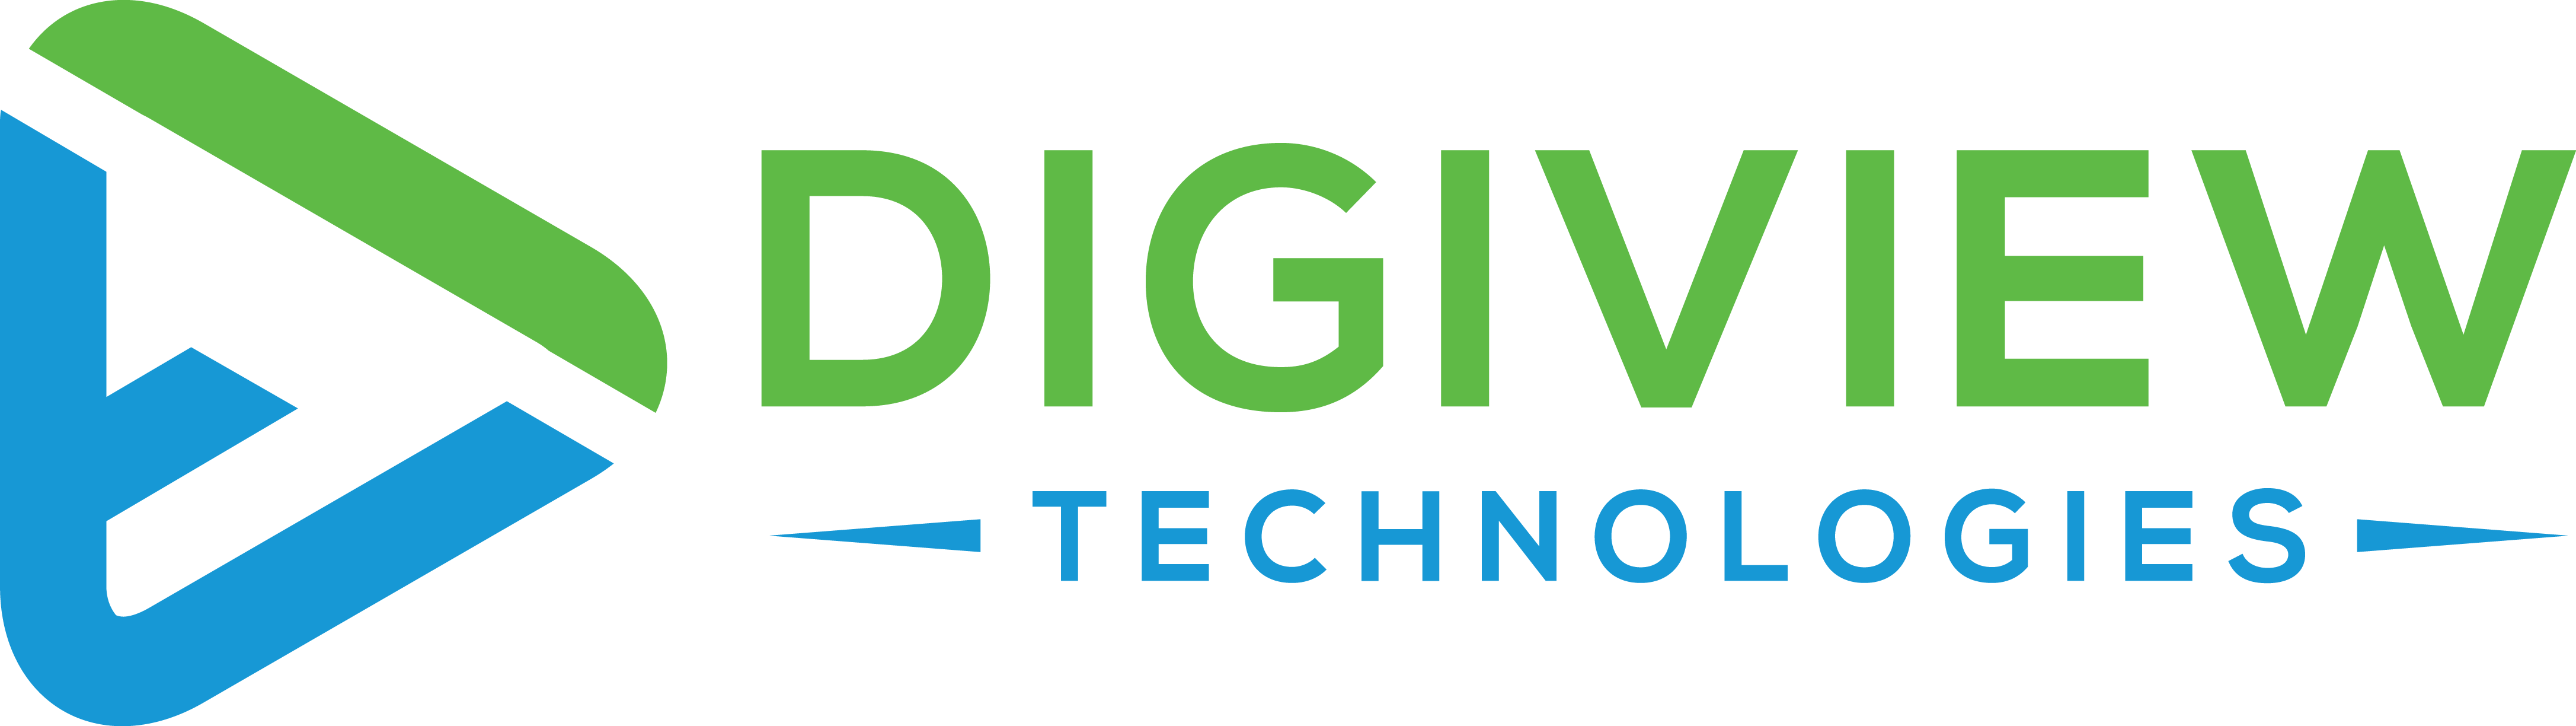 Digiview Technologies